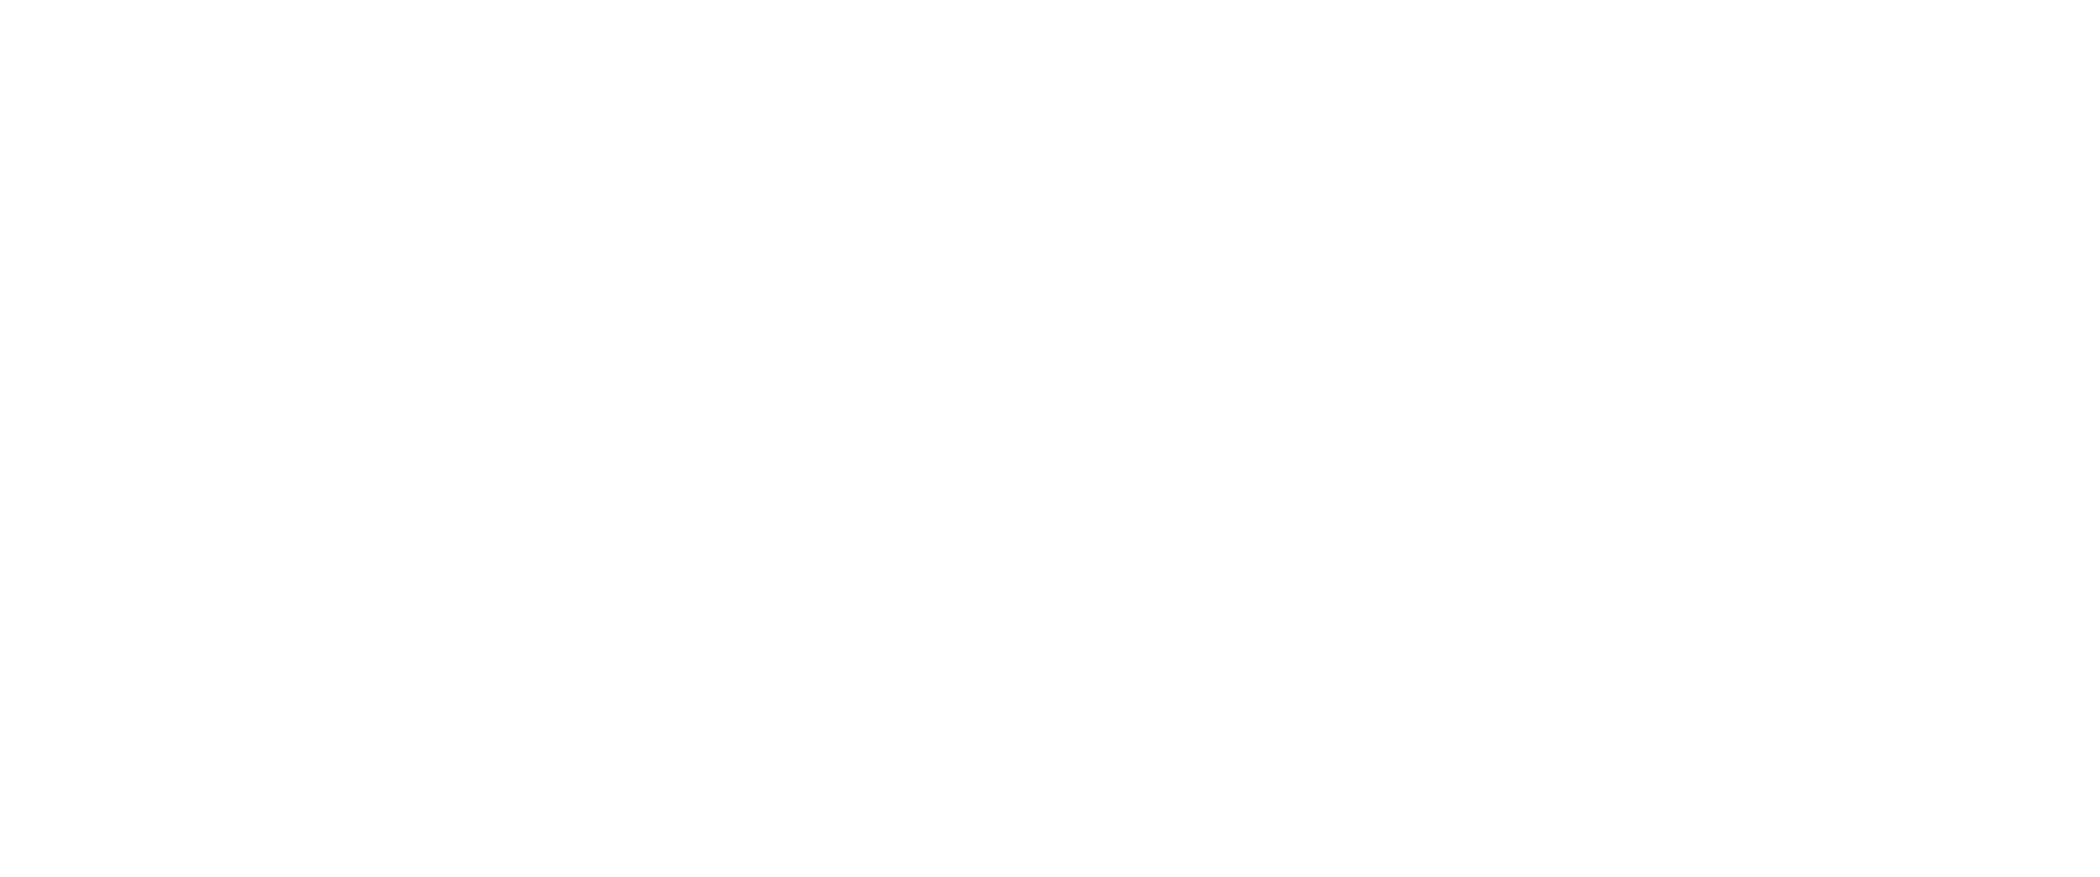 Bucca Barnd Logo White.png